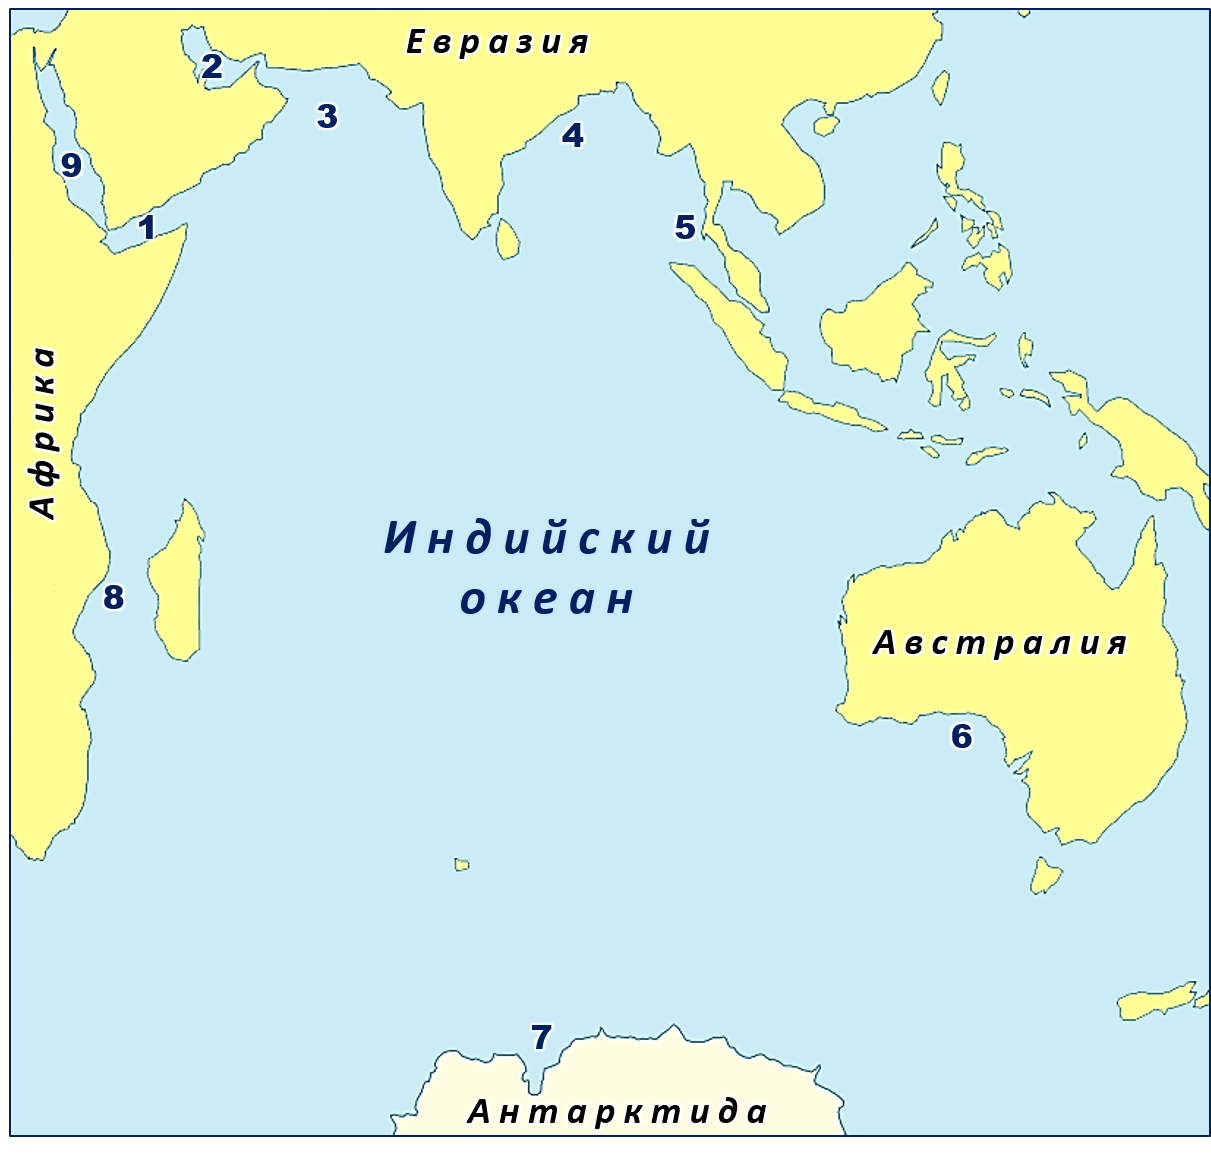 Индийский океан географическое положение на карте. Индийский океан географическое положение географическая карта. Карта индийского океана с морями заливами и проливами. Индийский океан на карте.